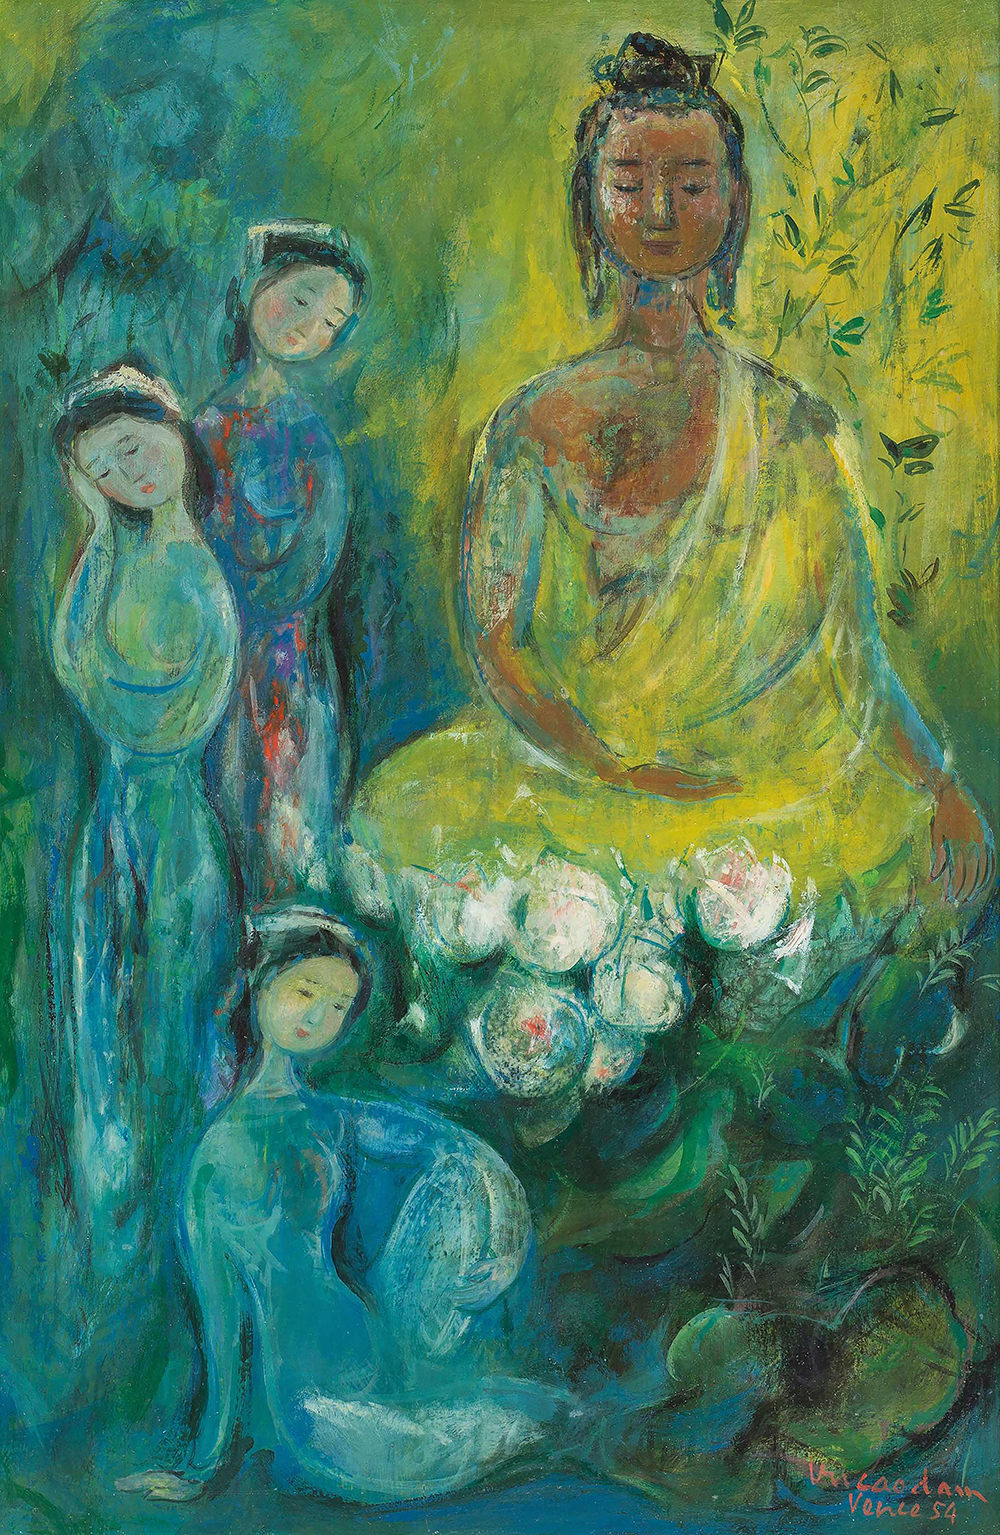 Buddhist Buddha painting on canvas BUD0147